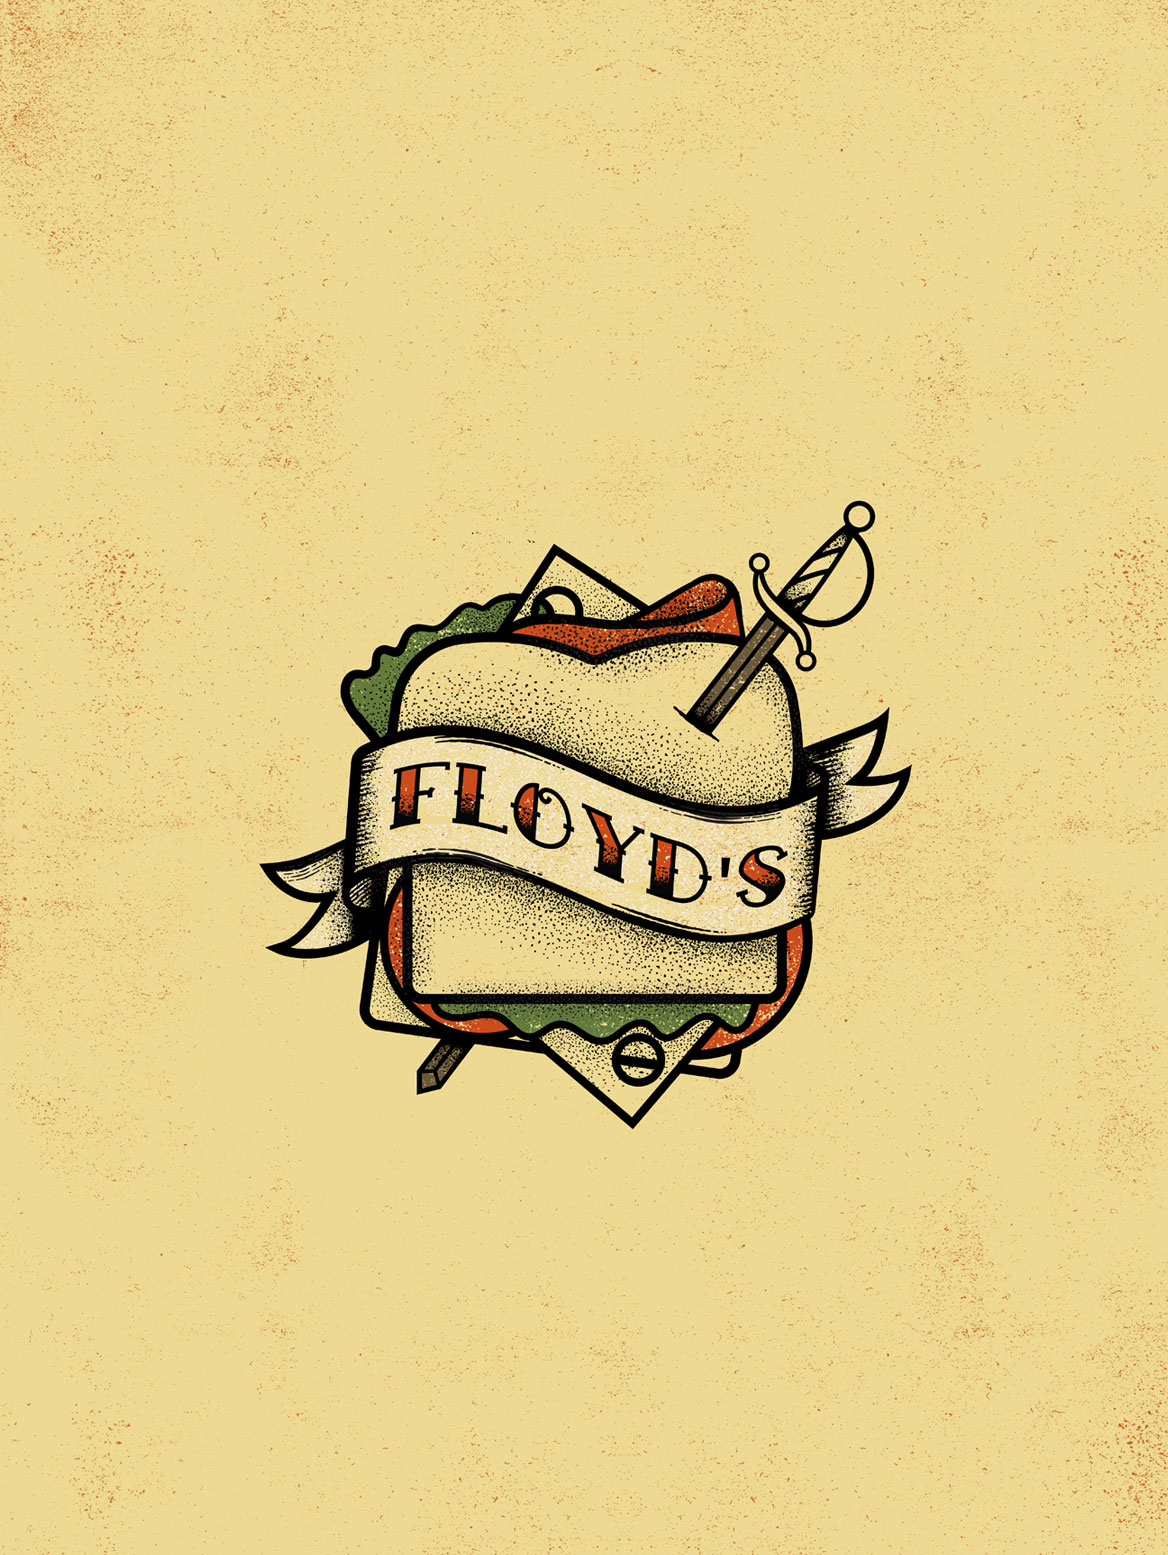 Floyd’s